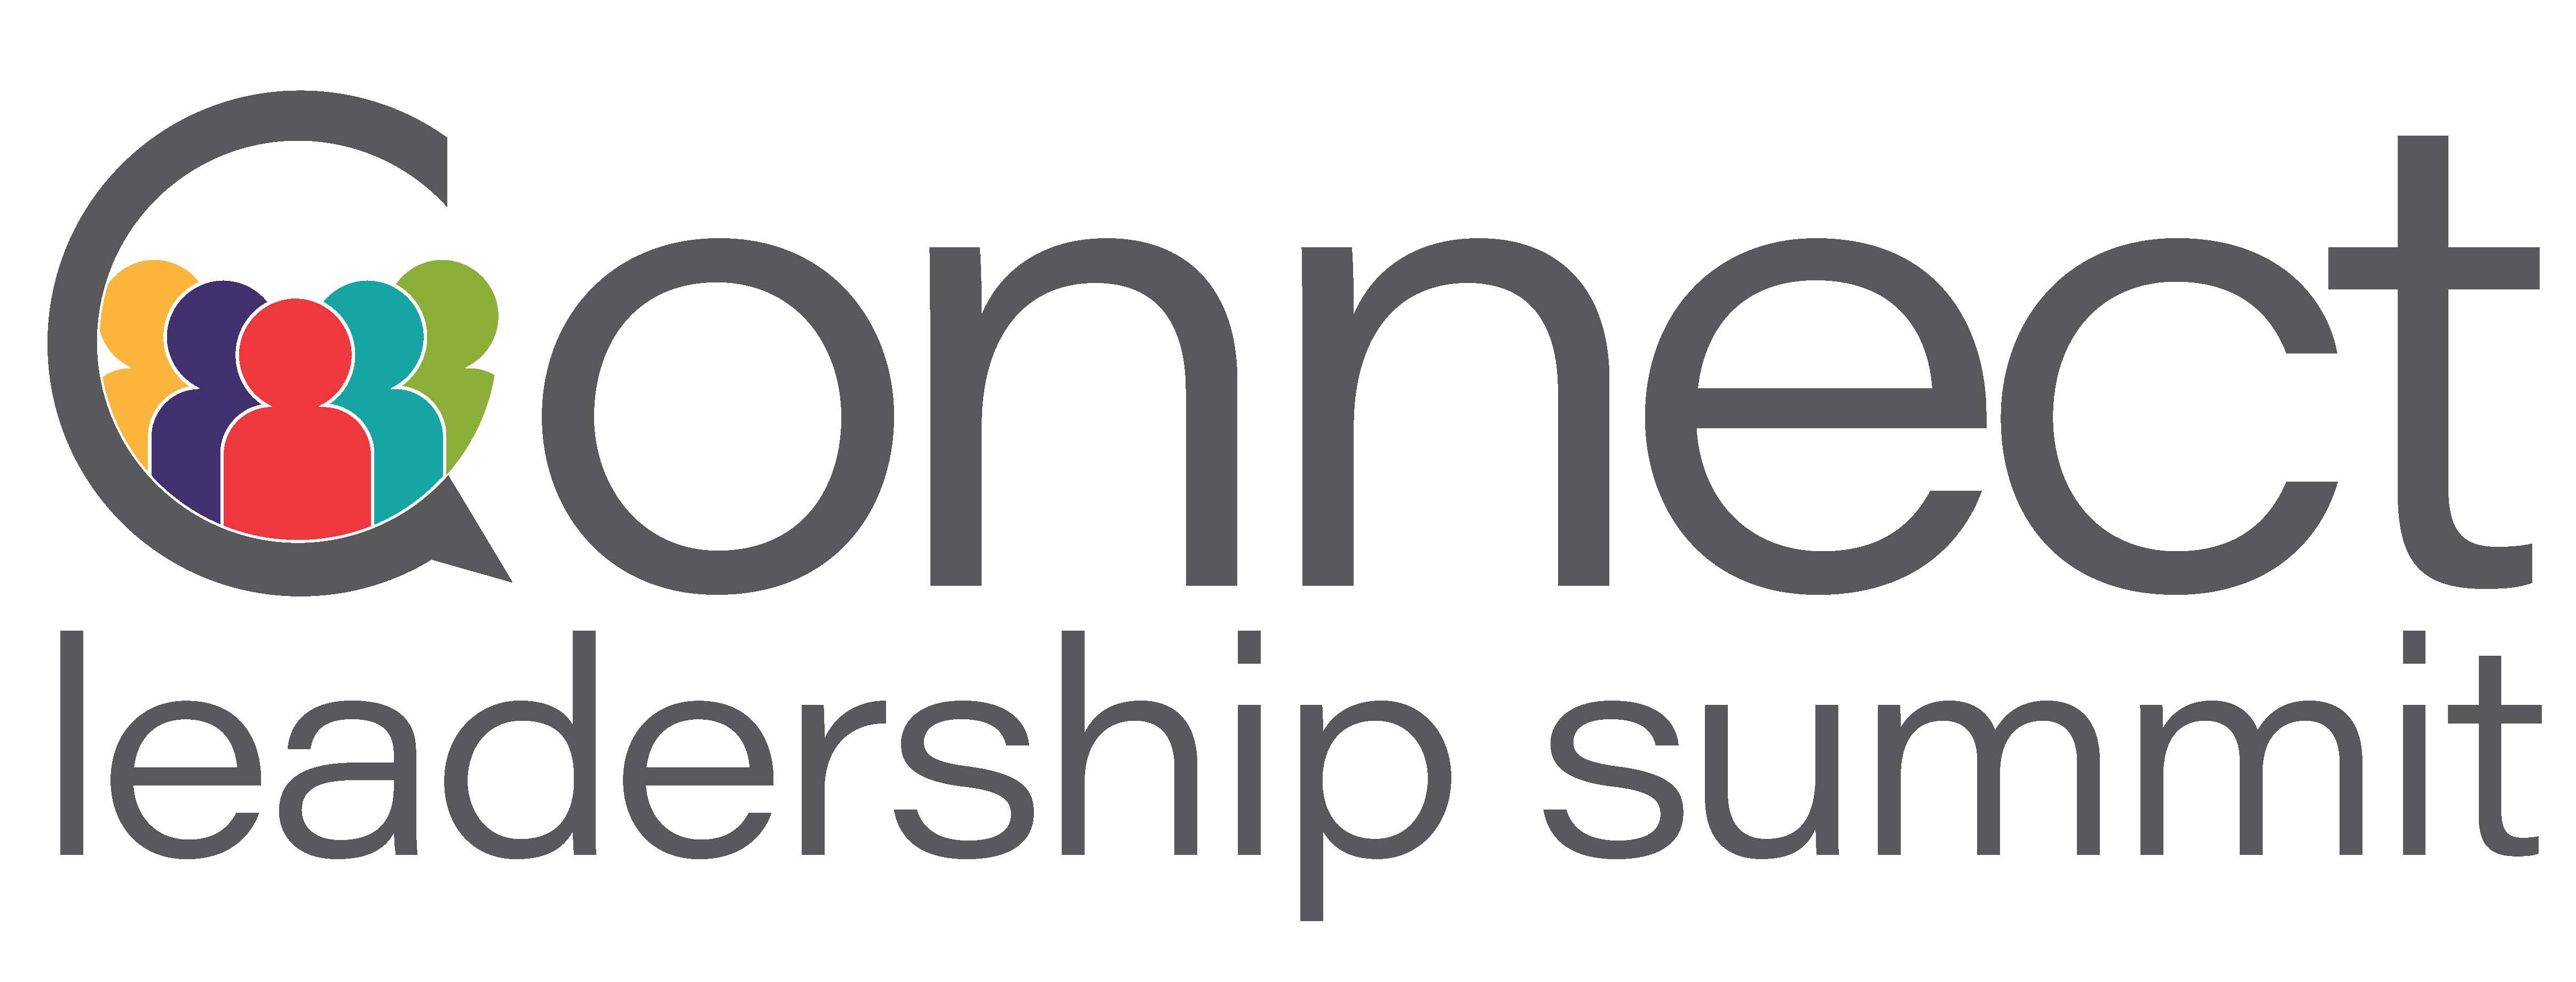 Connect Leadership Summit - March 7, 2020 Baltimore Region